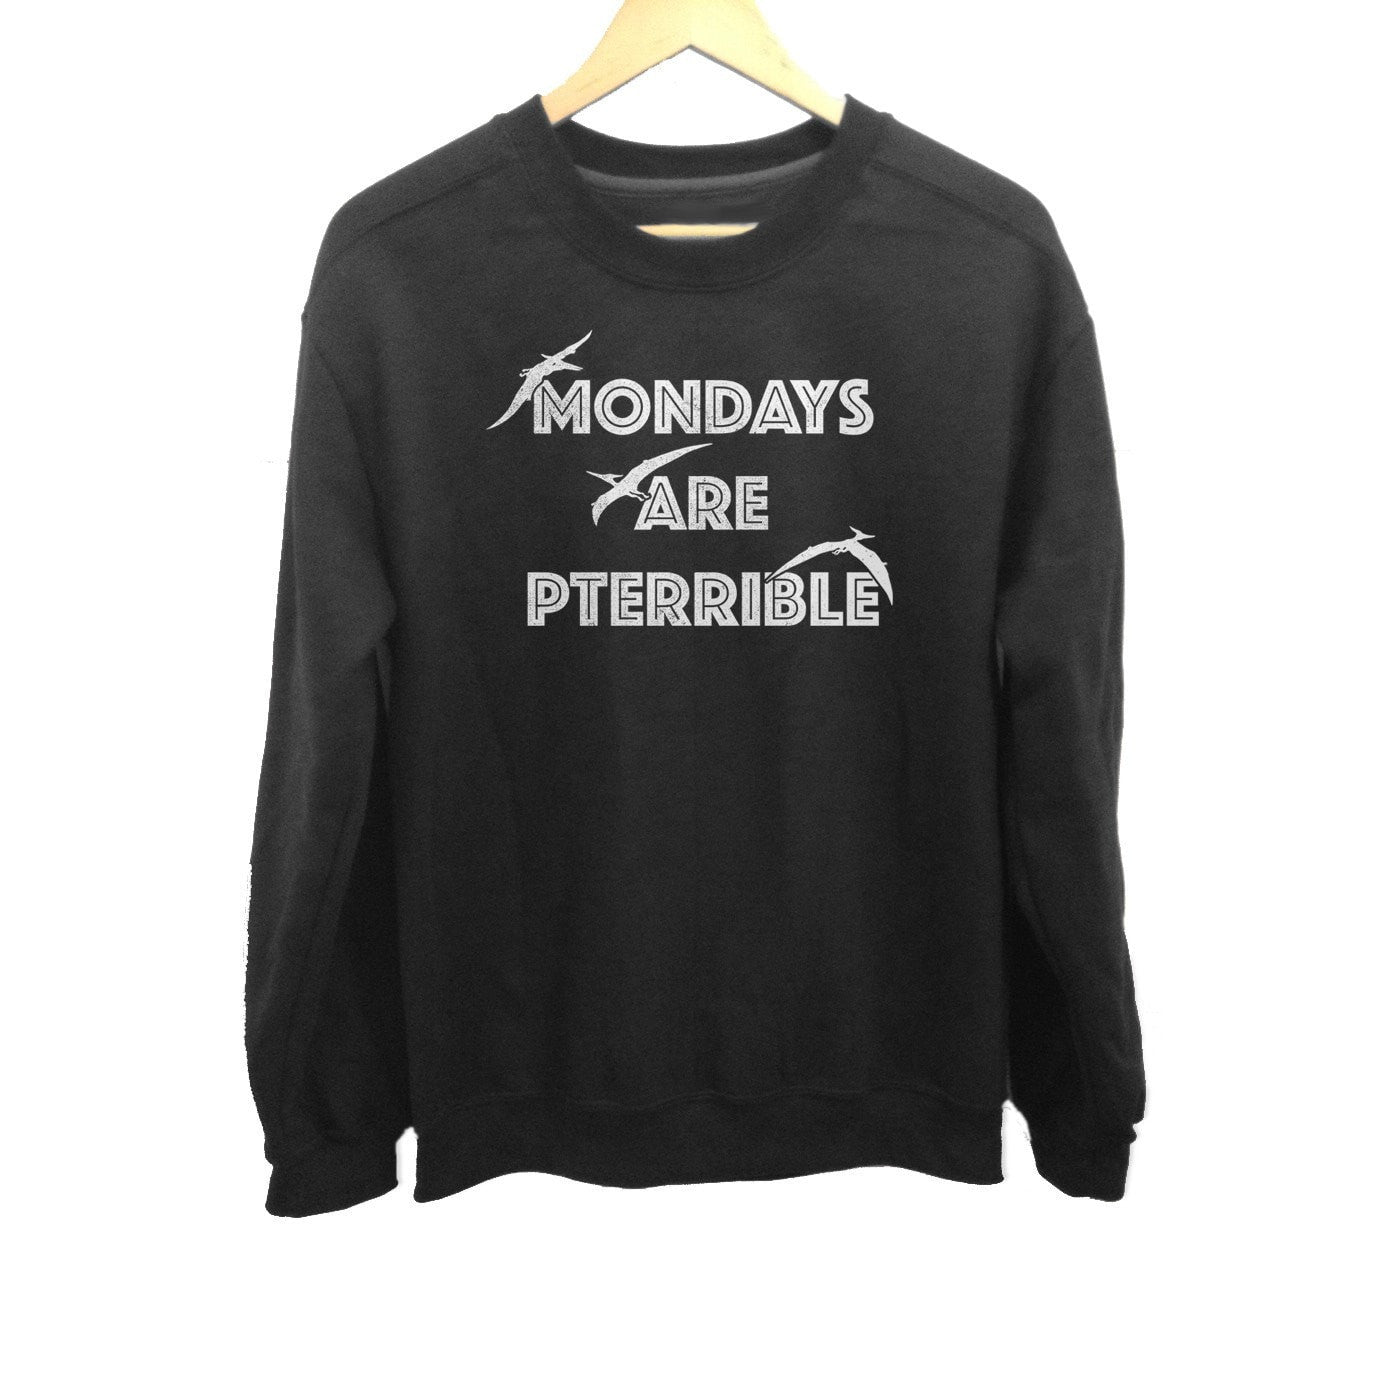 Unisex Mondays Are Pterrible Sweatshirt - Funny Dinosaur Shirt